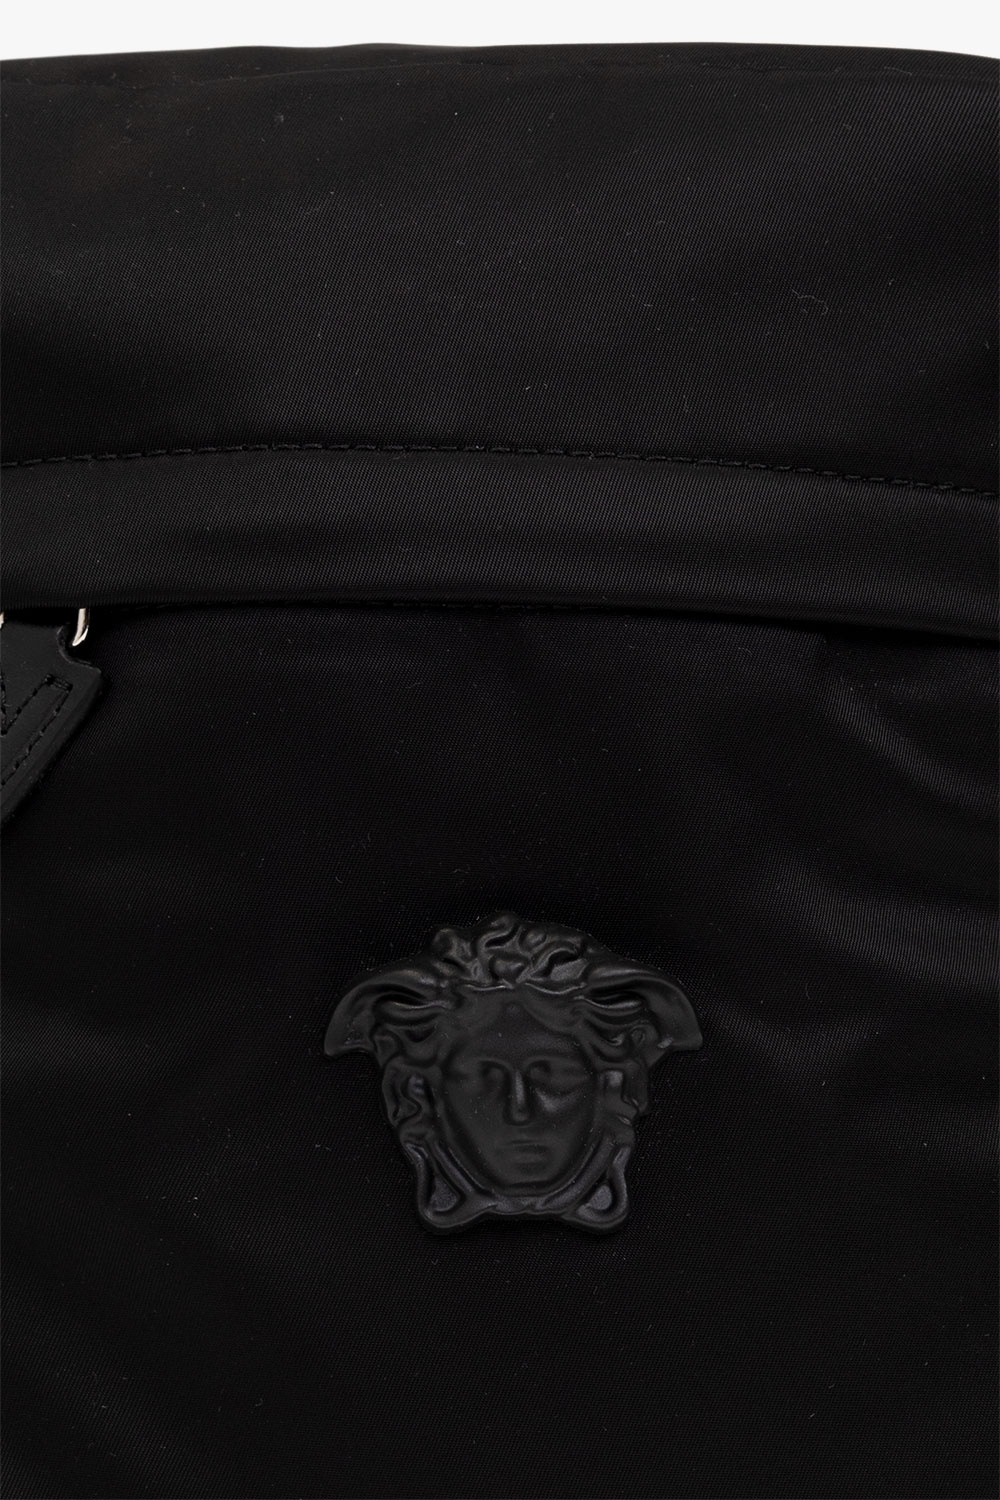 Versace Medusa head backpack